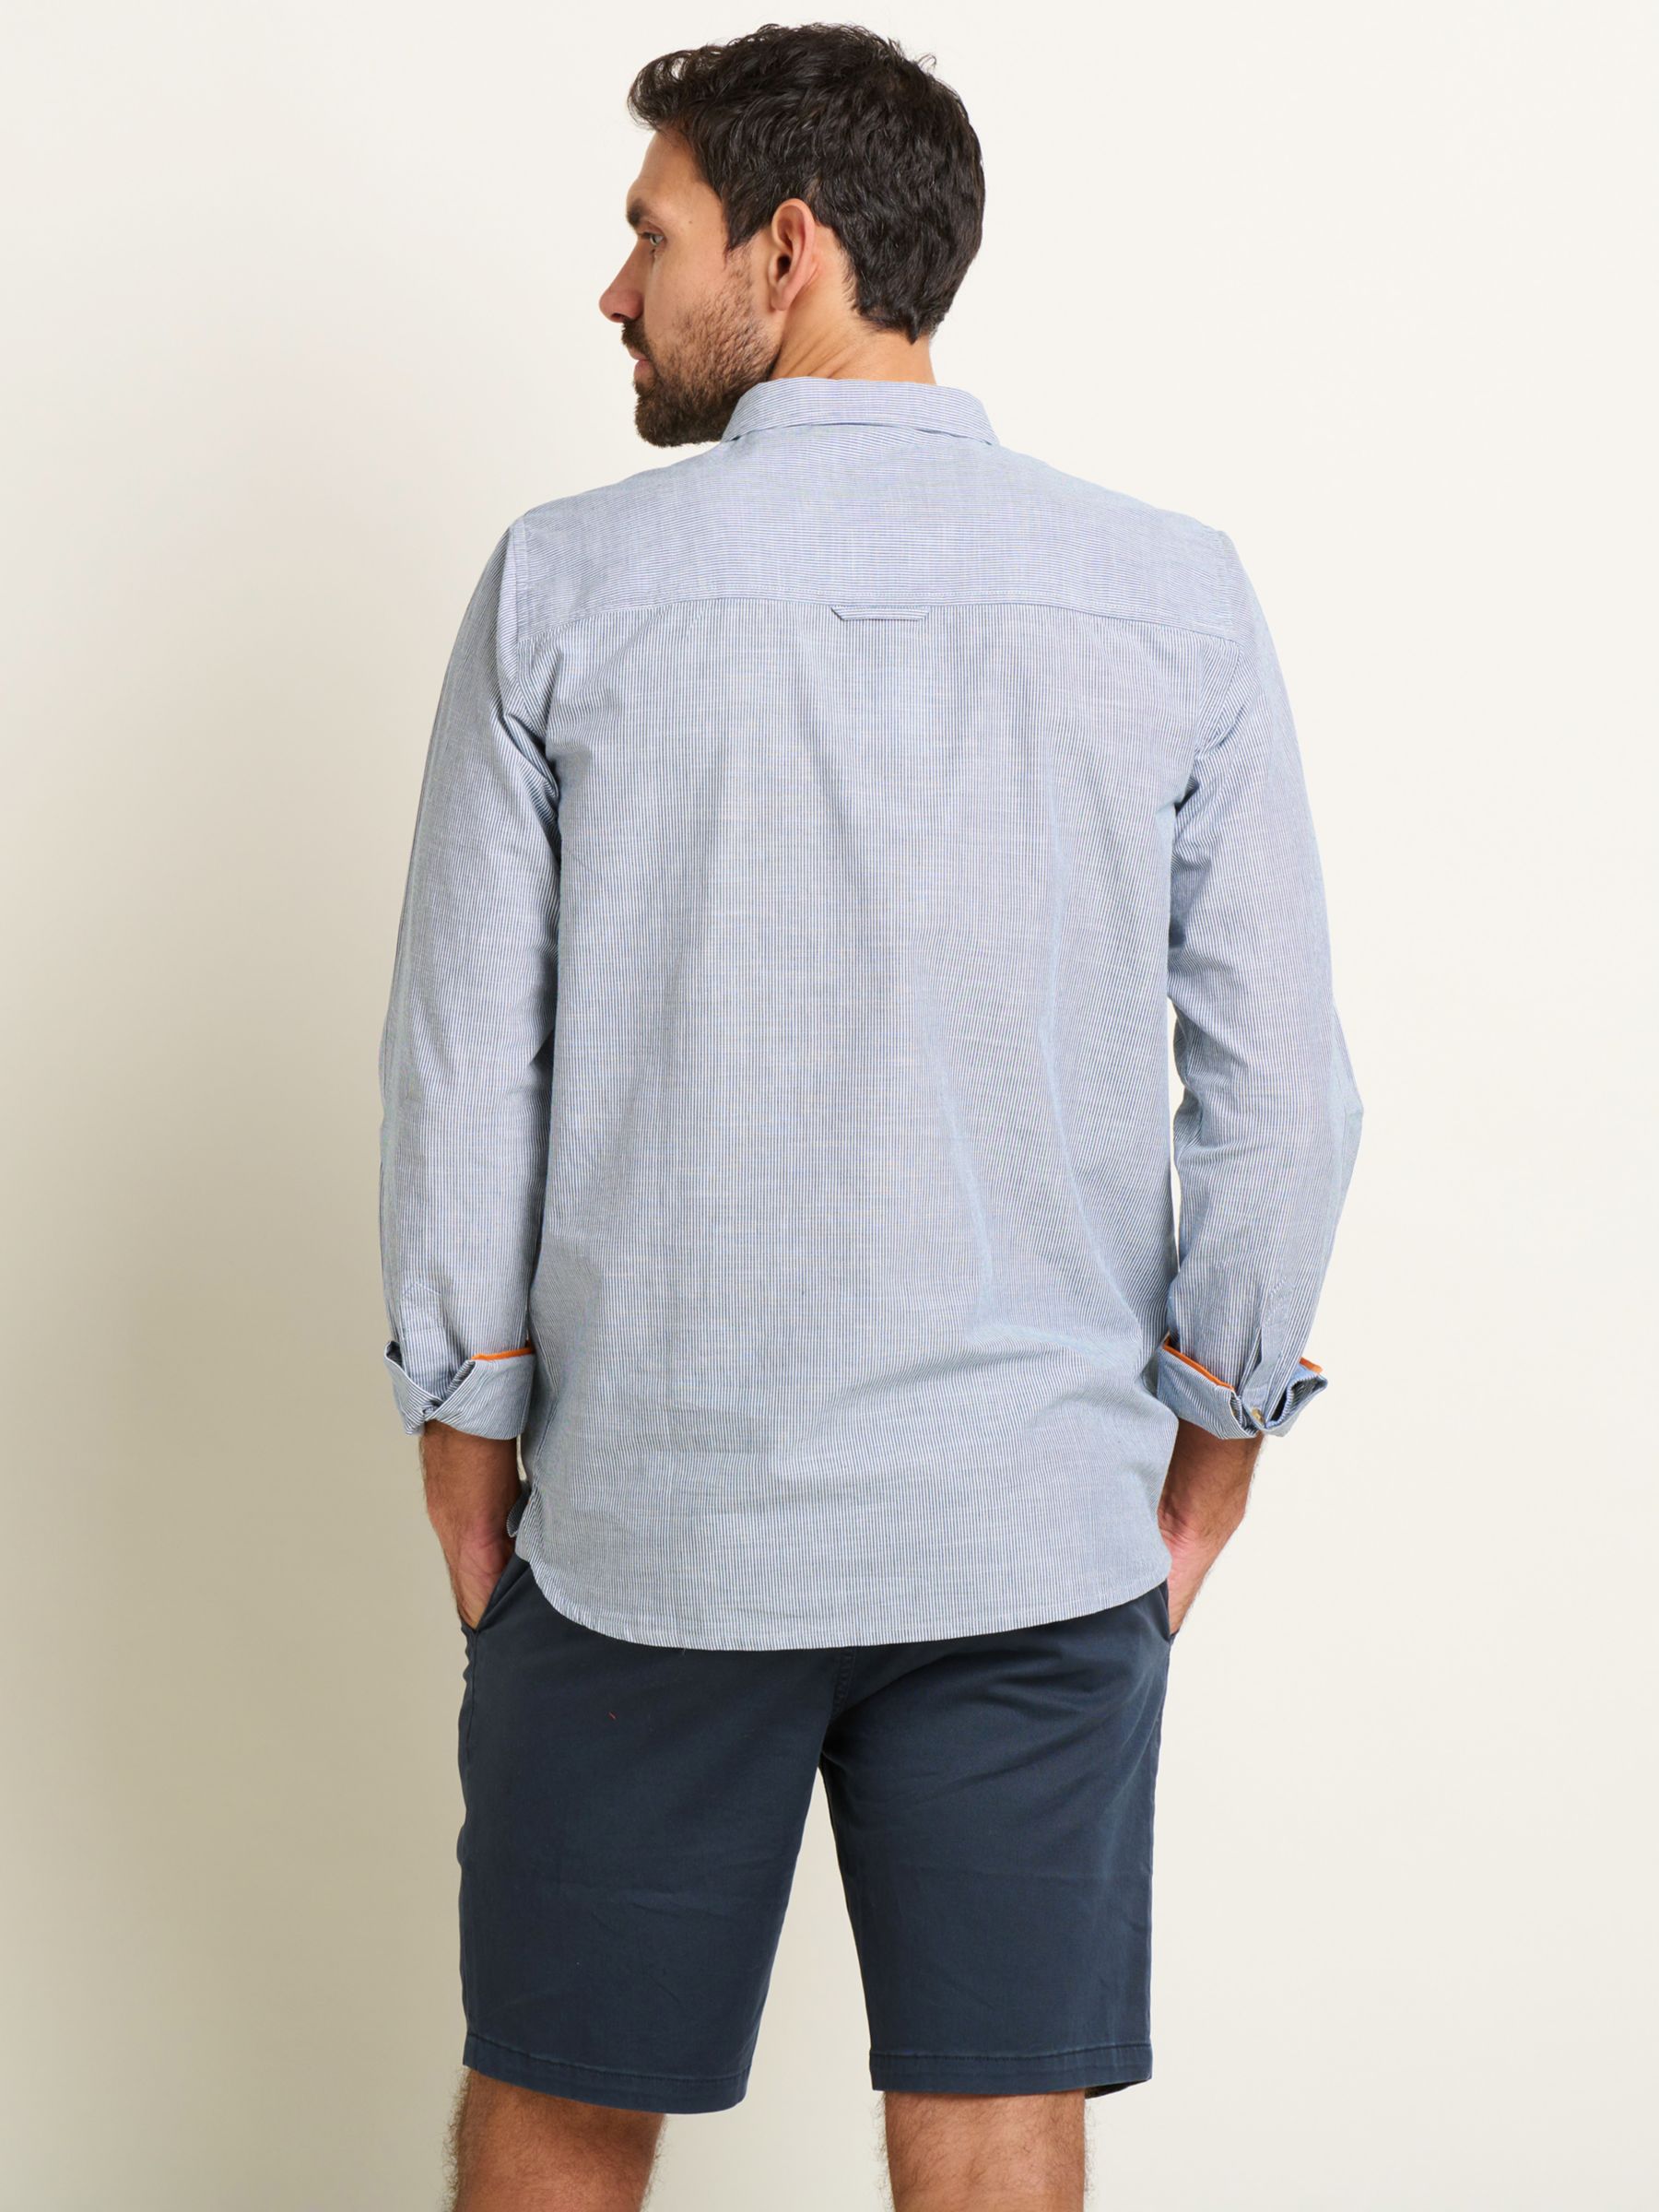 Brakeburn Cotton Stripe Long Sleeve Shirt, Blue, M